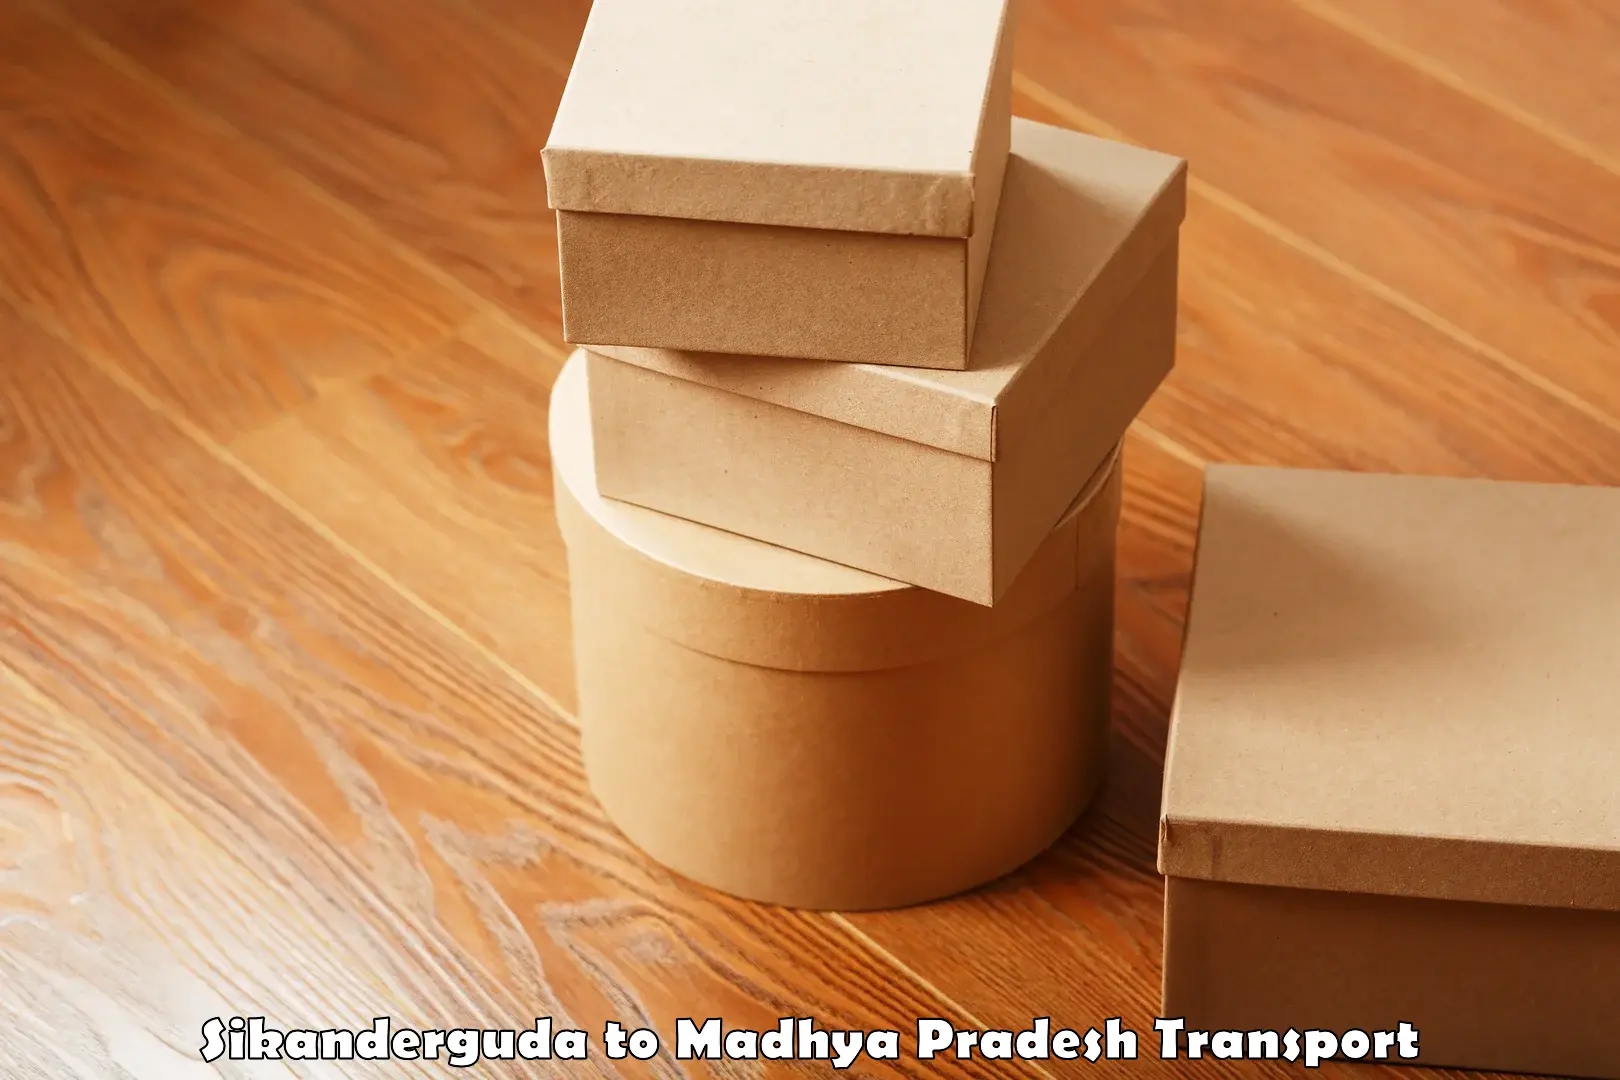 Shipping services Sikanderguda to Madhya Pradesh